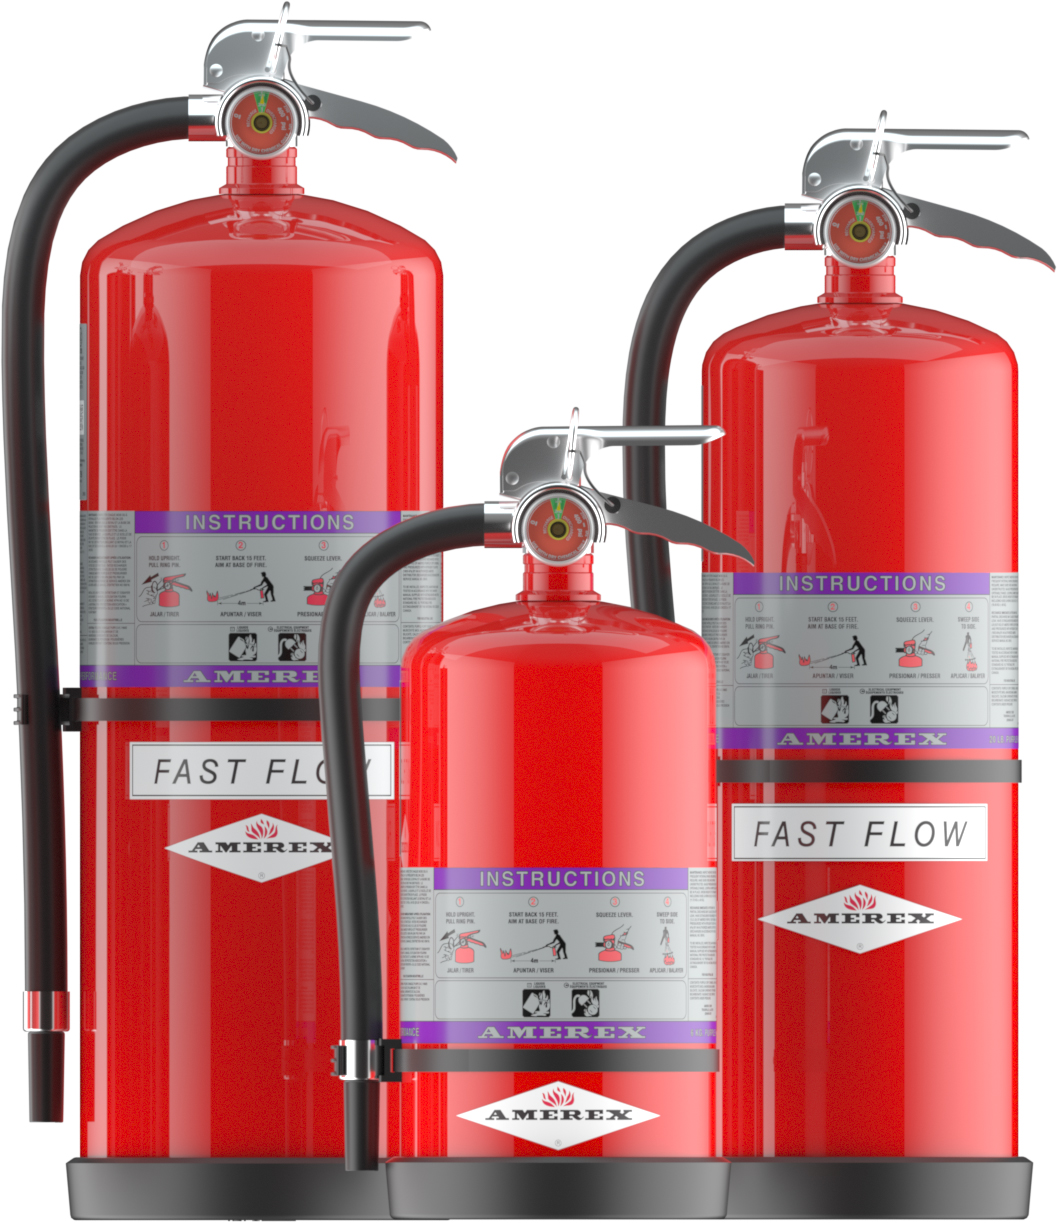 Z-Series High-Performance Extinguishers